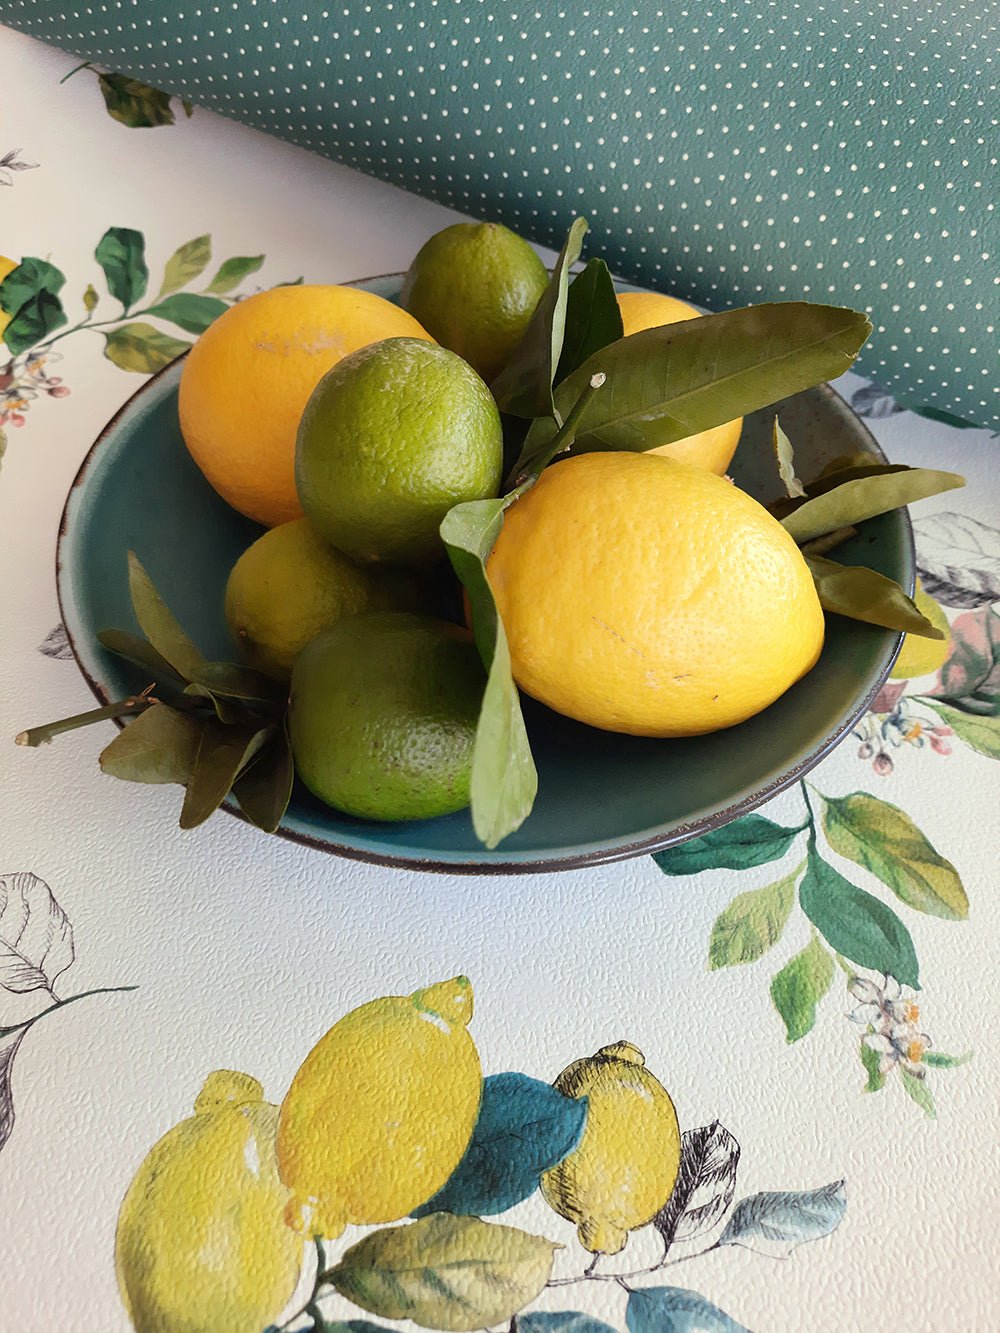 Lemon tee - Hvid, gule, grøn - Malprivat.dk